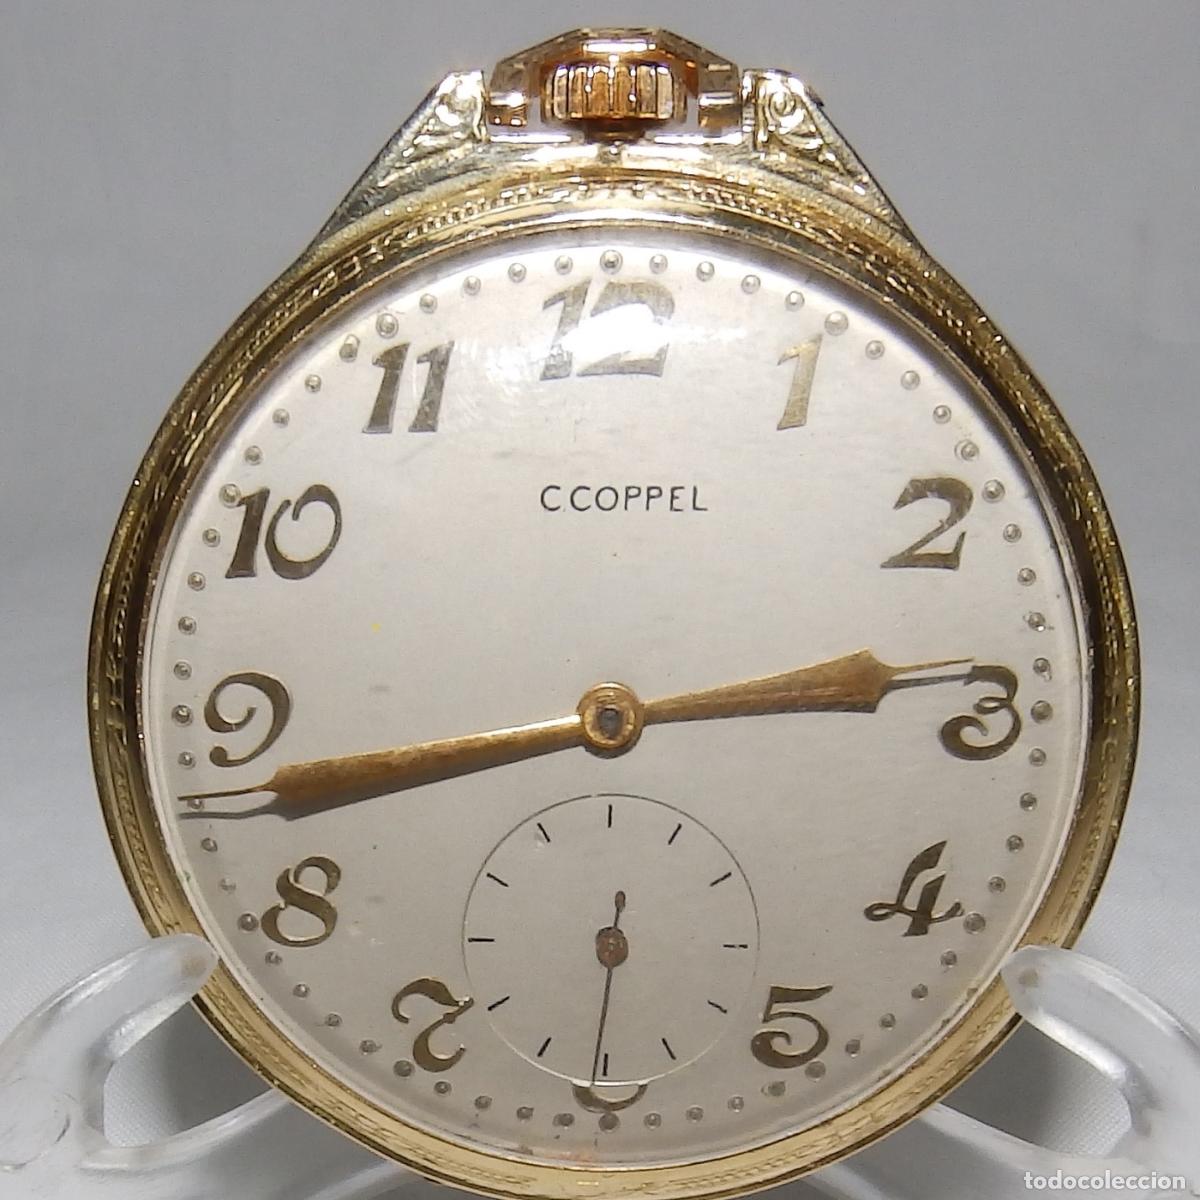 duncan watch co. para c. coppel. reloj de bolsi - Comprar Relógios antigos  de bolso no todocoleccion